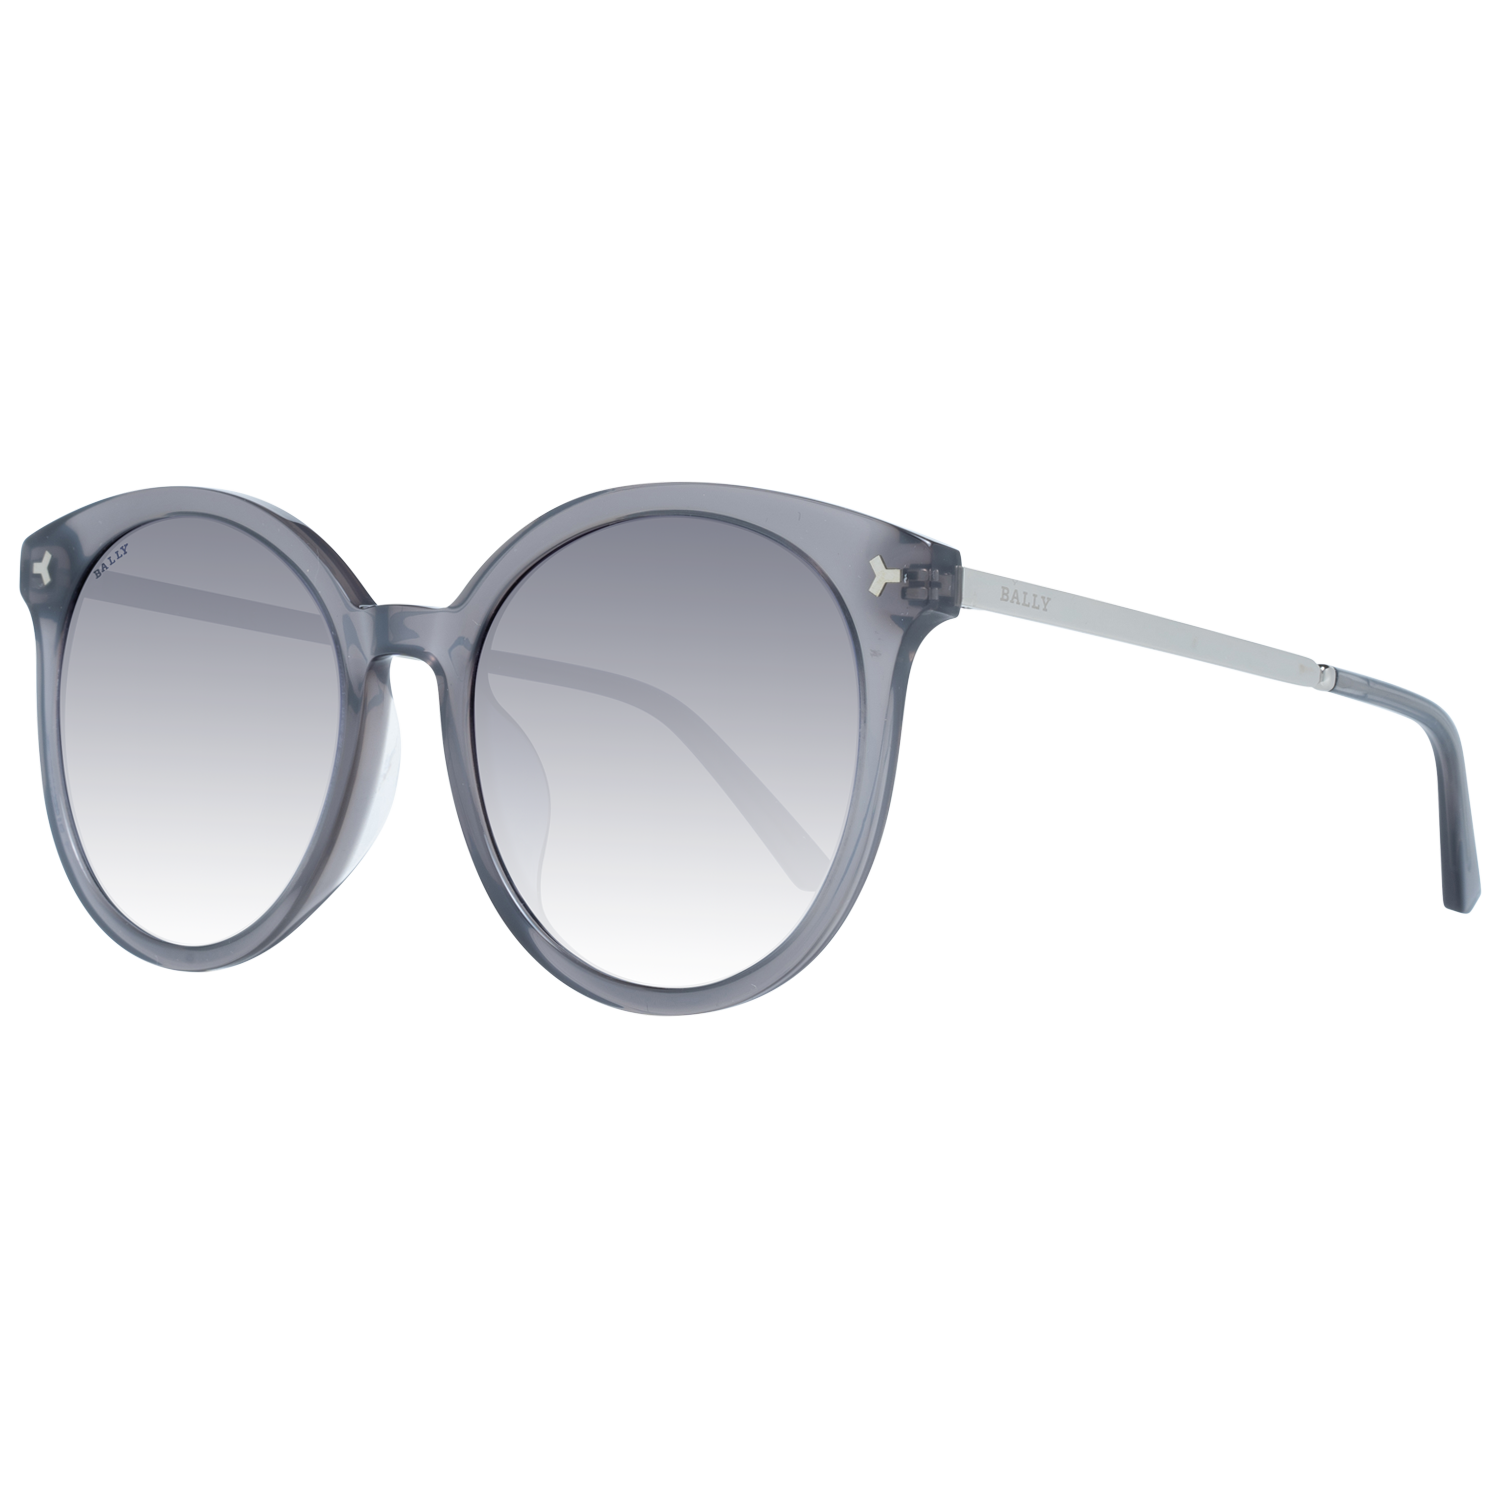 Bally Sunglasses Bally Sunglasses BY0046-K 20B 57 Eyeglasses Eyewear UK USA Australia 